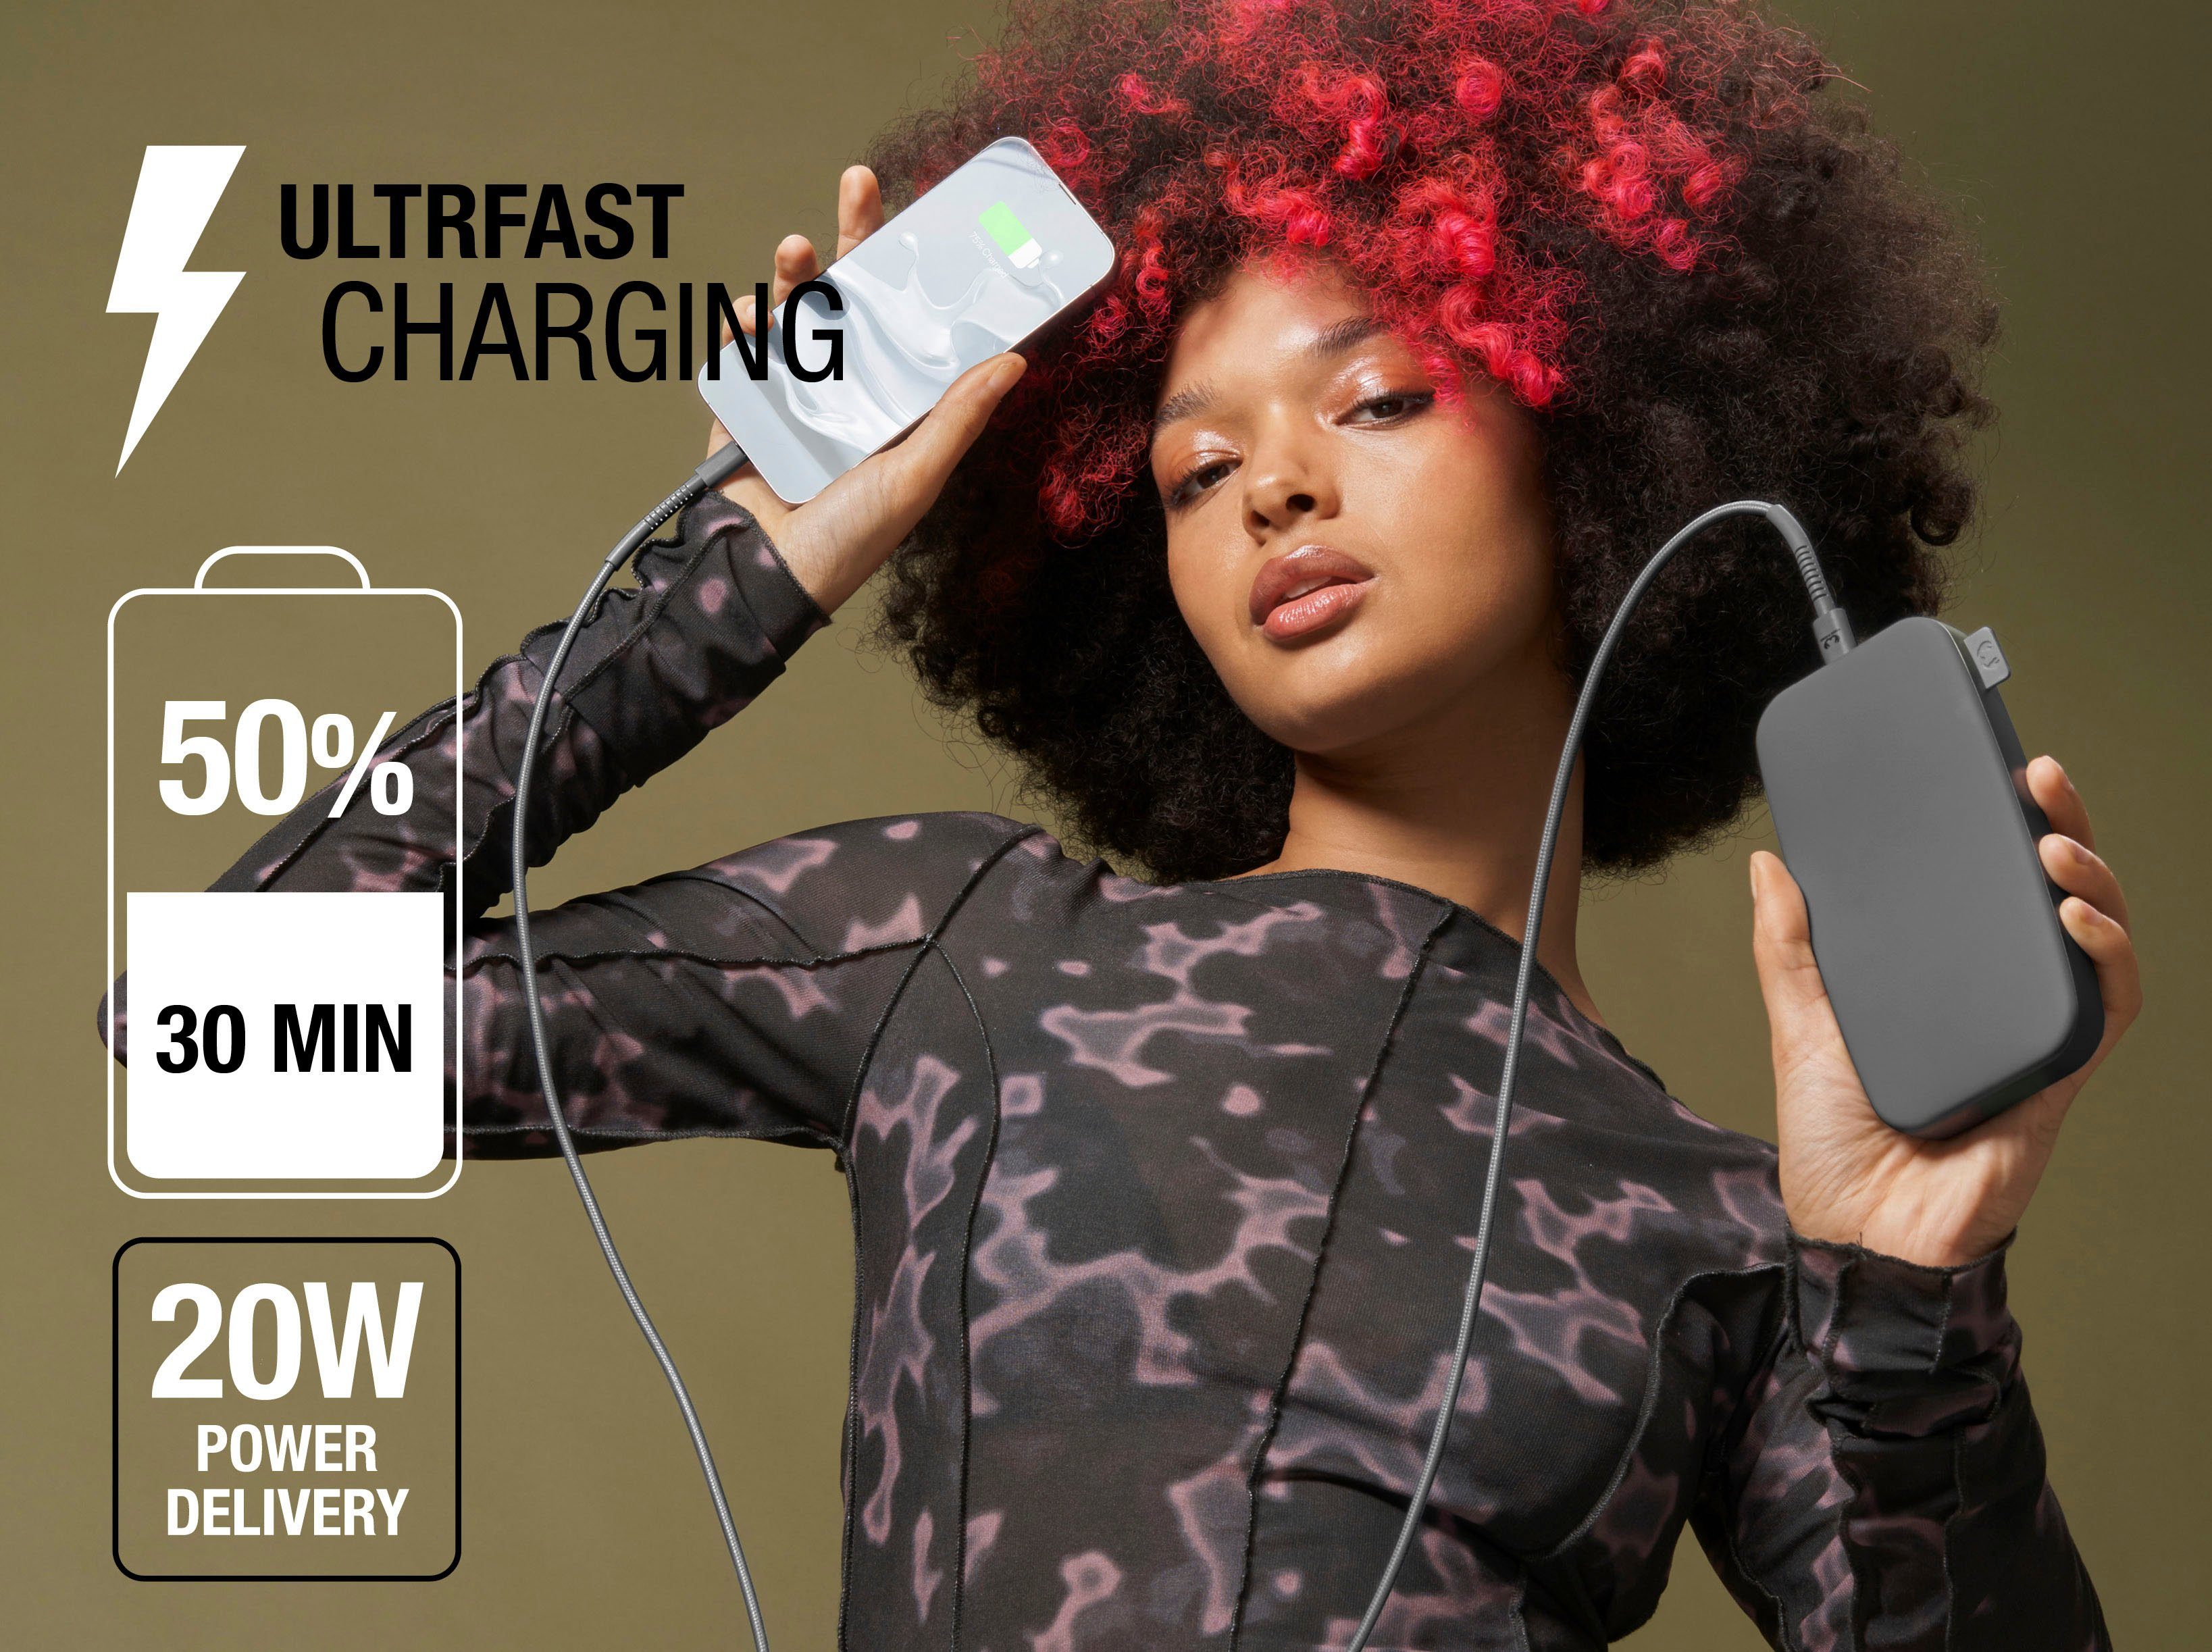 Ultra mit PD Power Rebel Fresh´n 20W & grau Fast Charge Powerbank Pack USB-C, 18000mAh